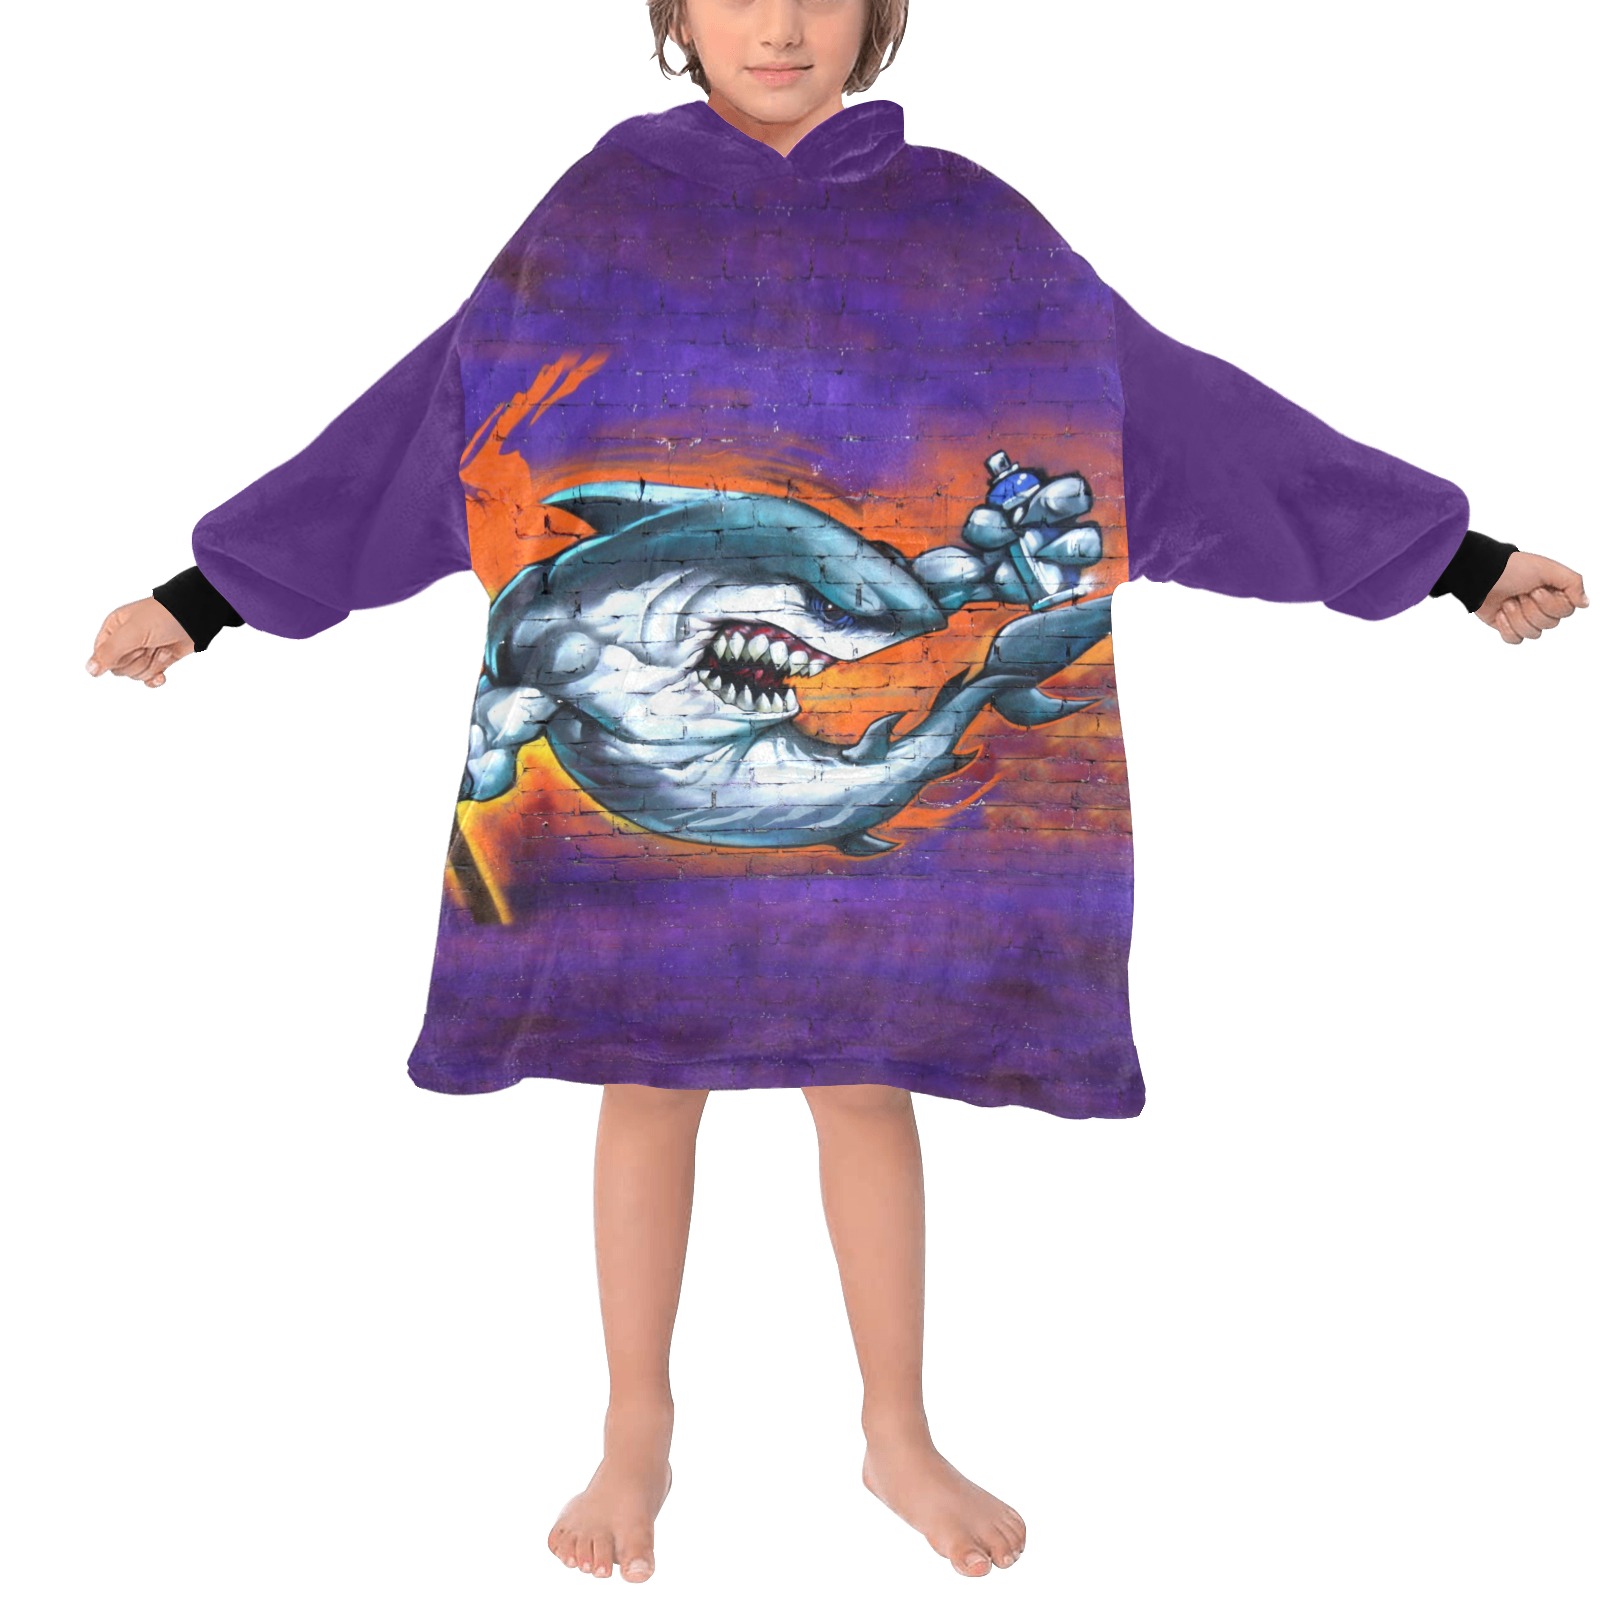 Graffiti Shark Wall Art - Purple Blanket Hoodie for Kids